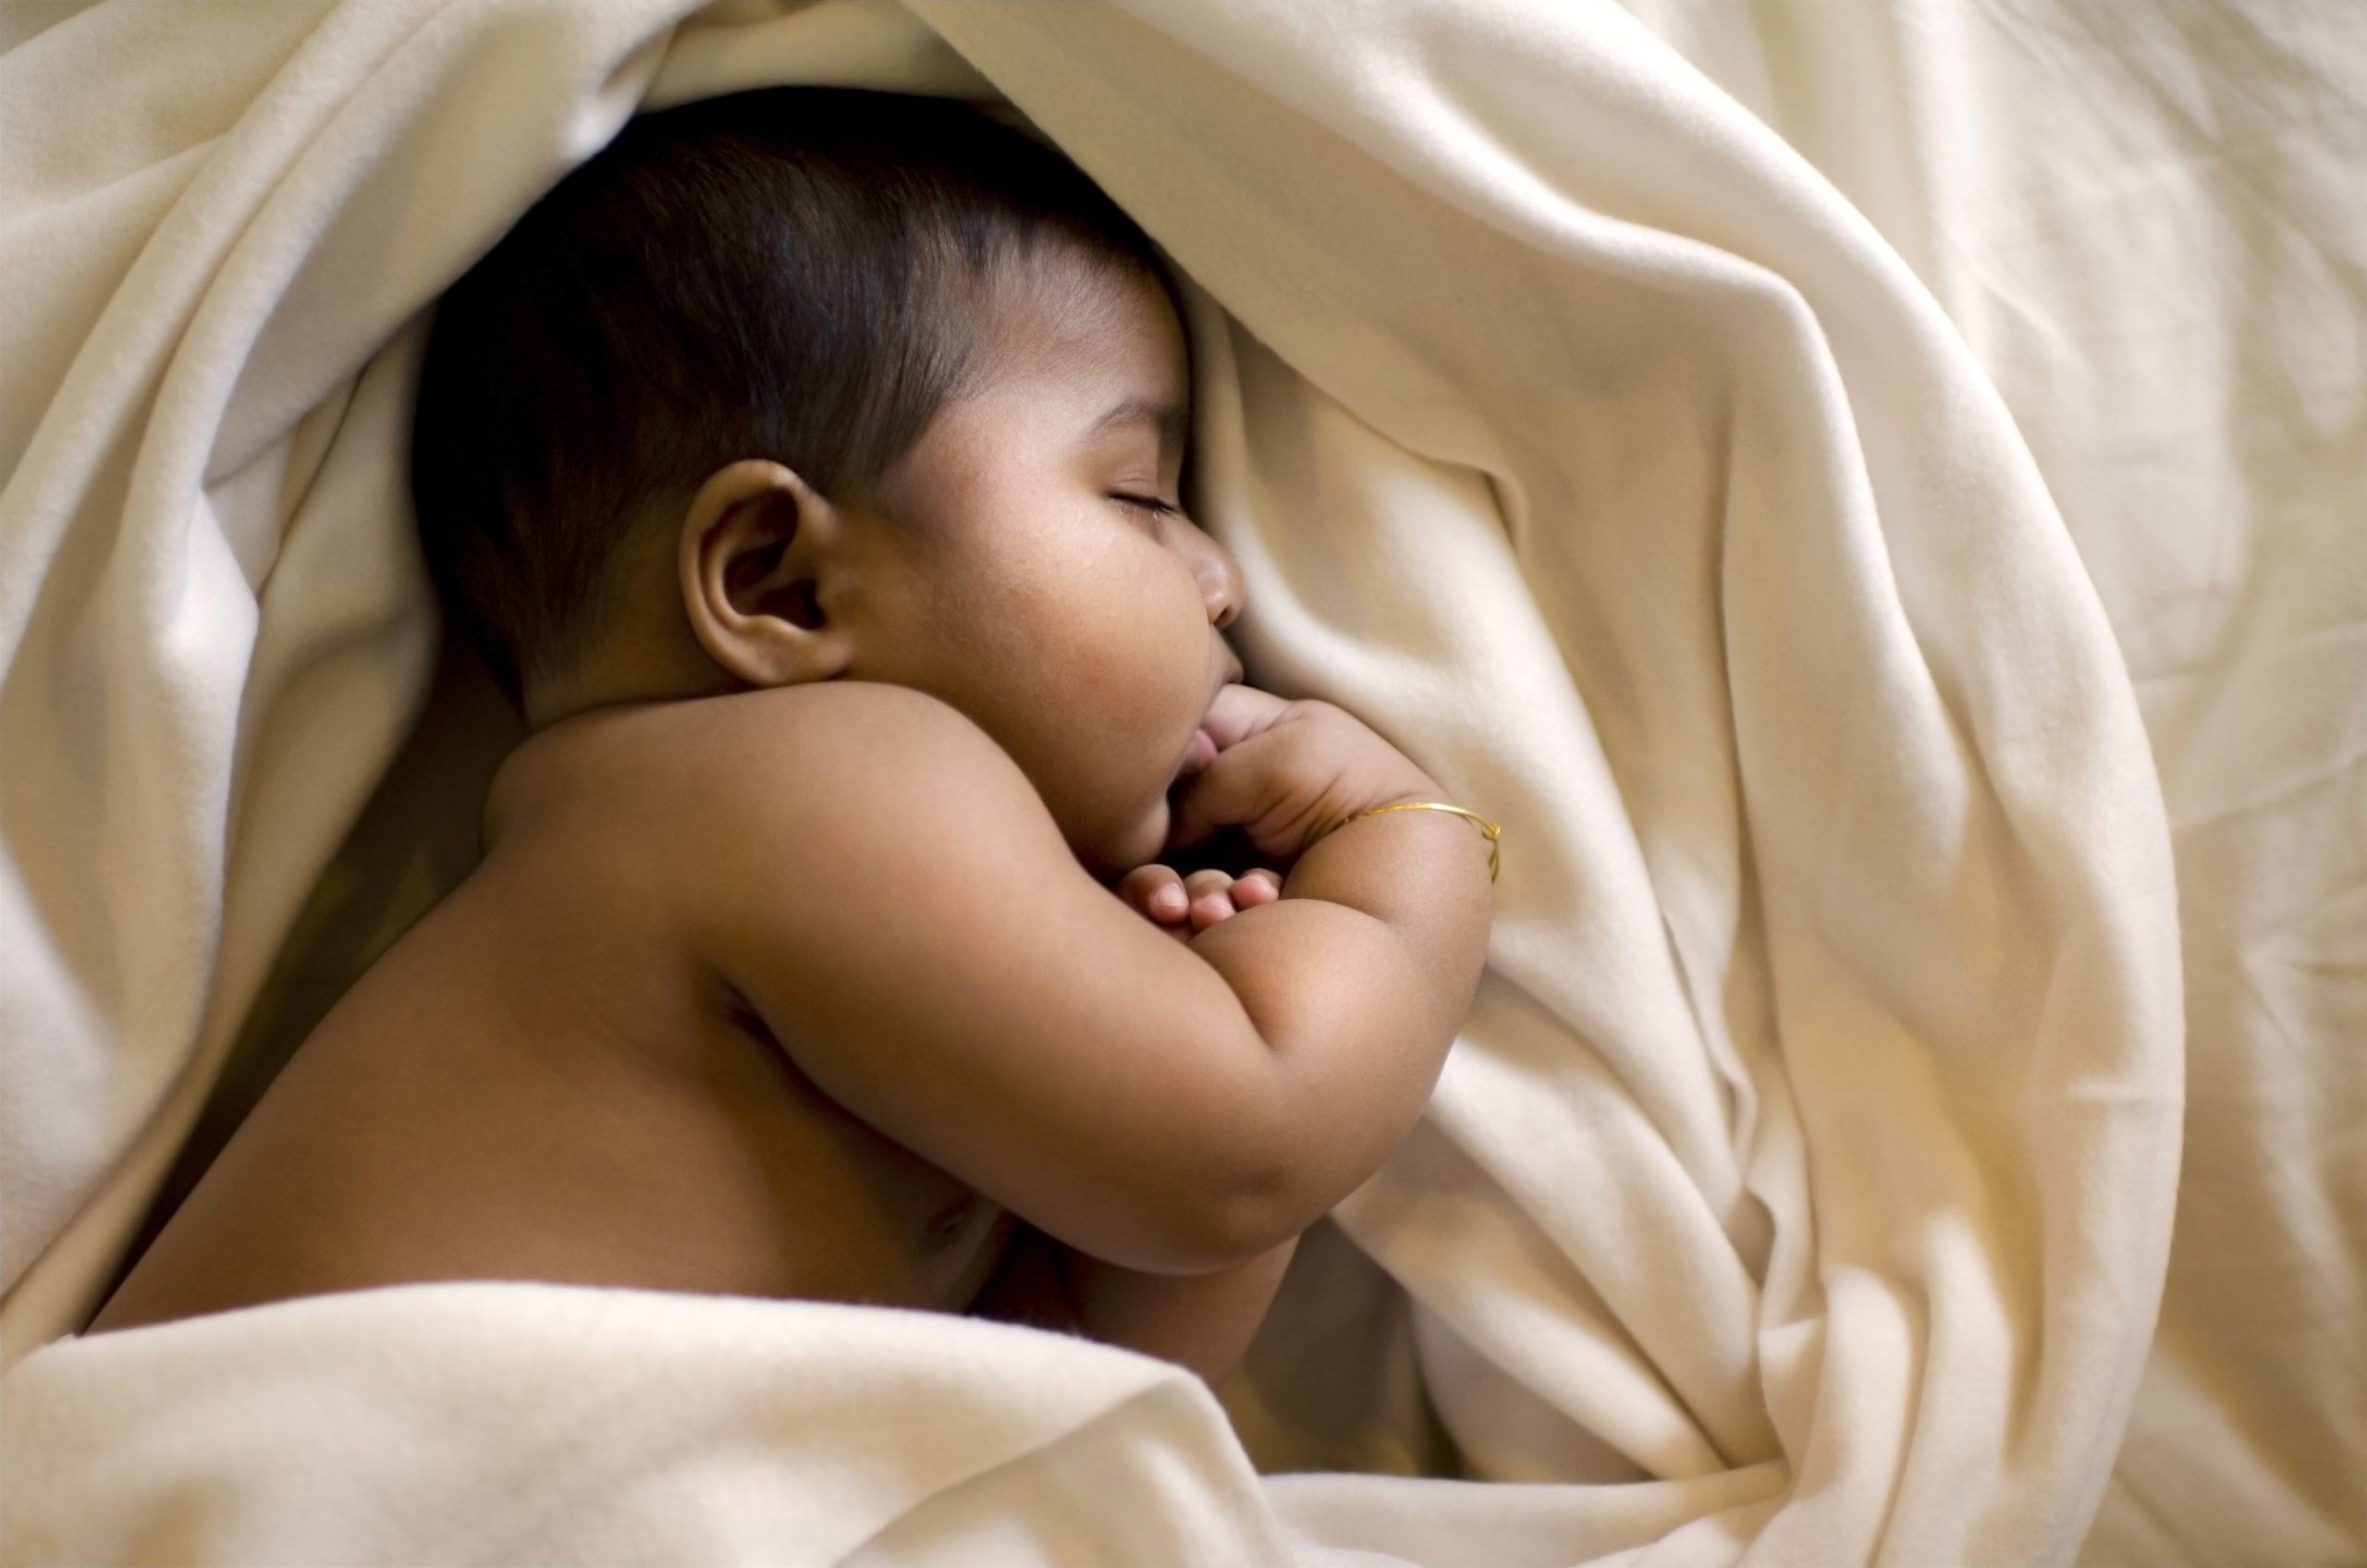 Muslim baby girl sleeping on her side in her crib.